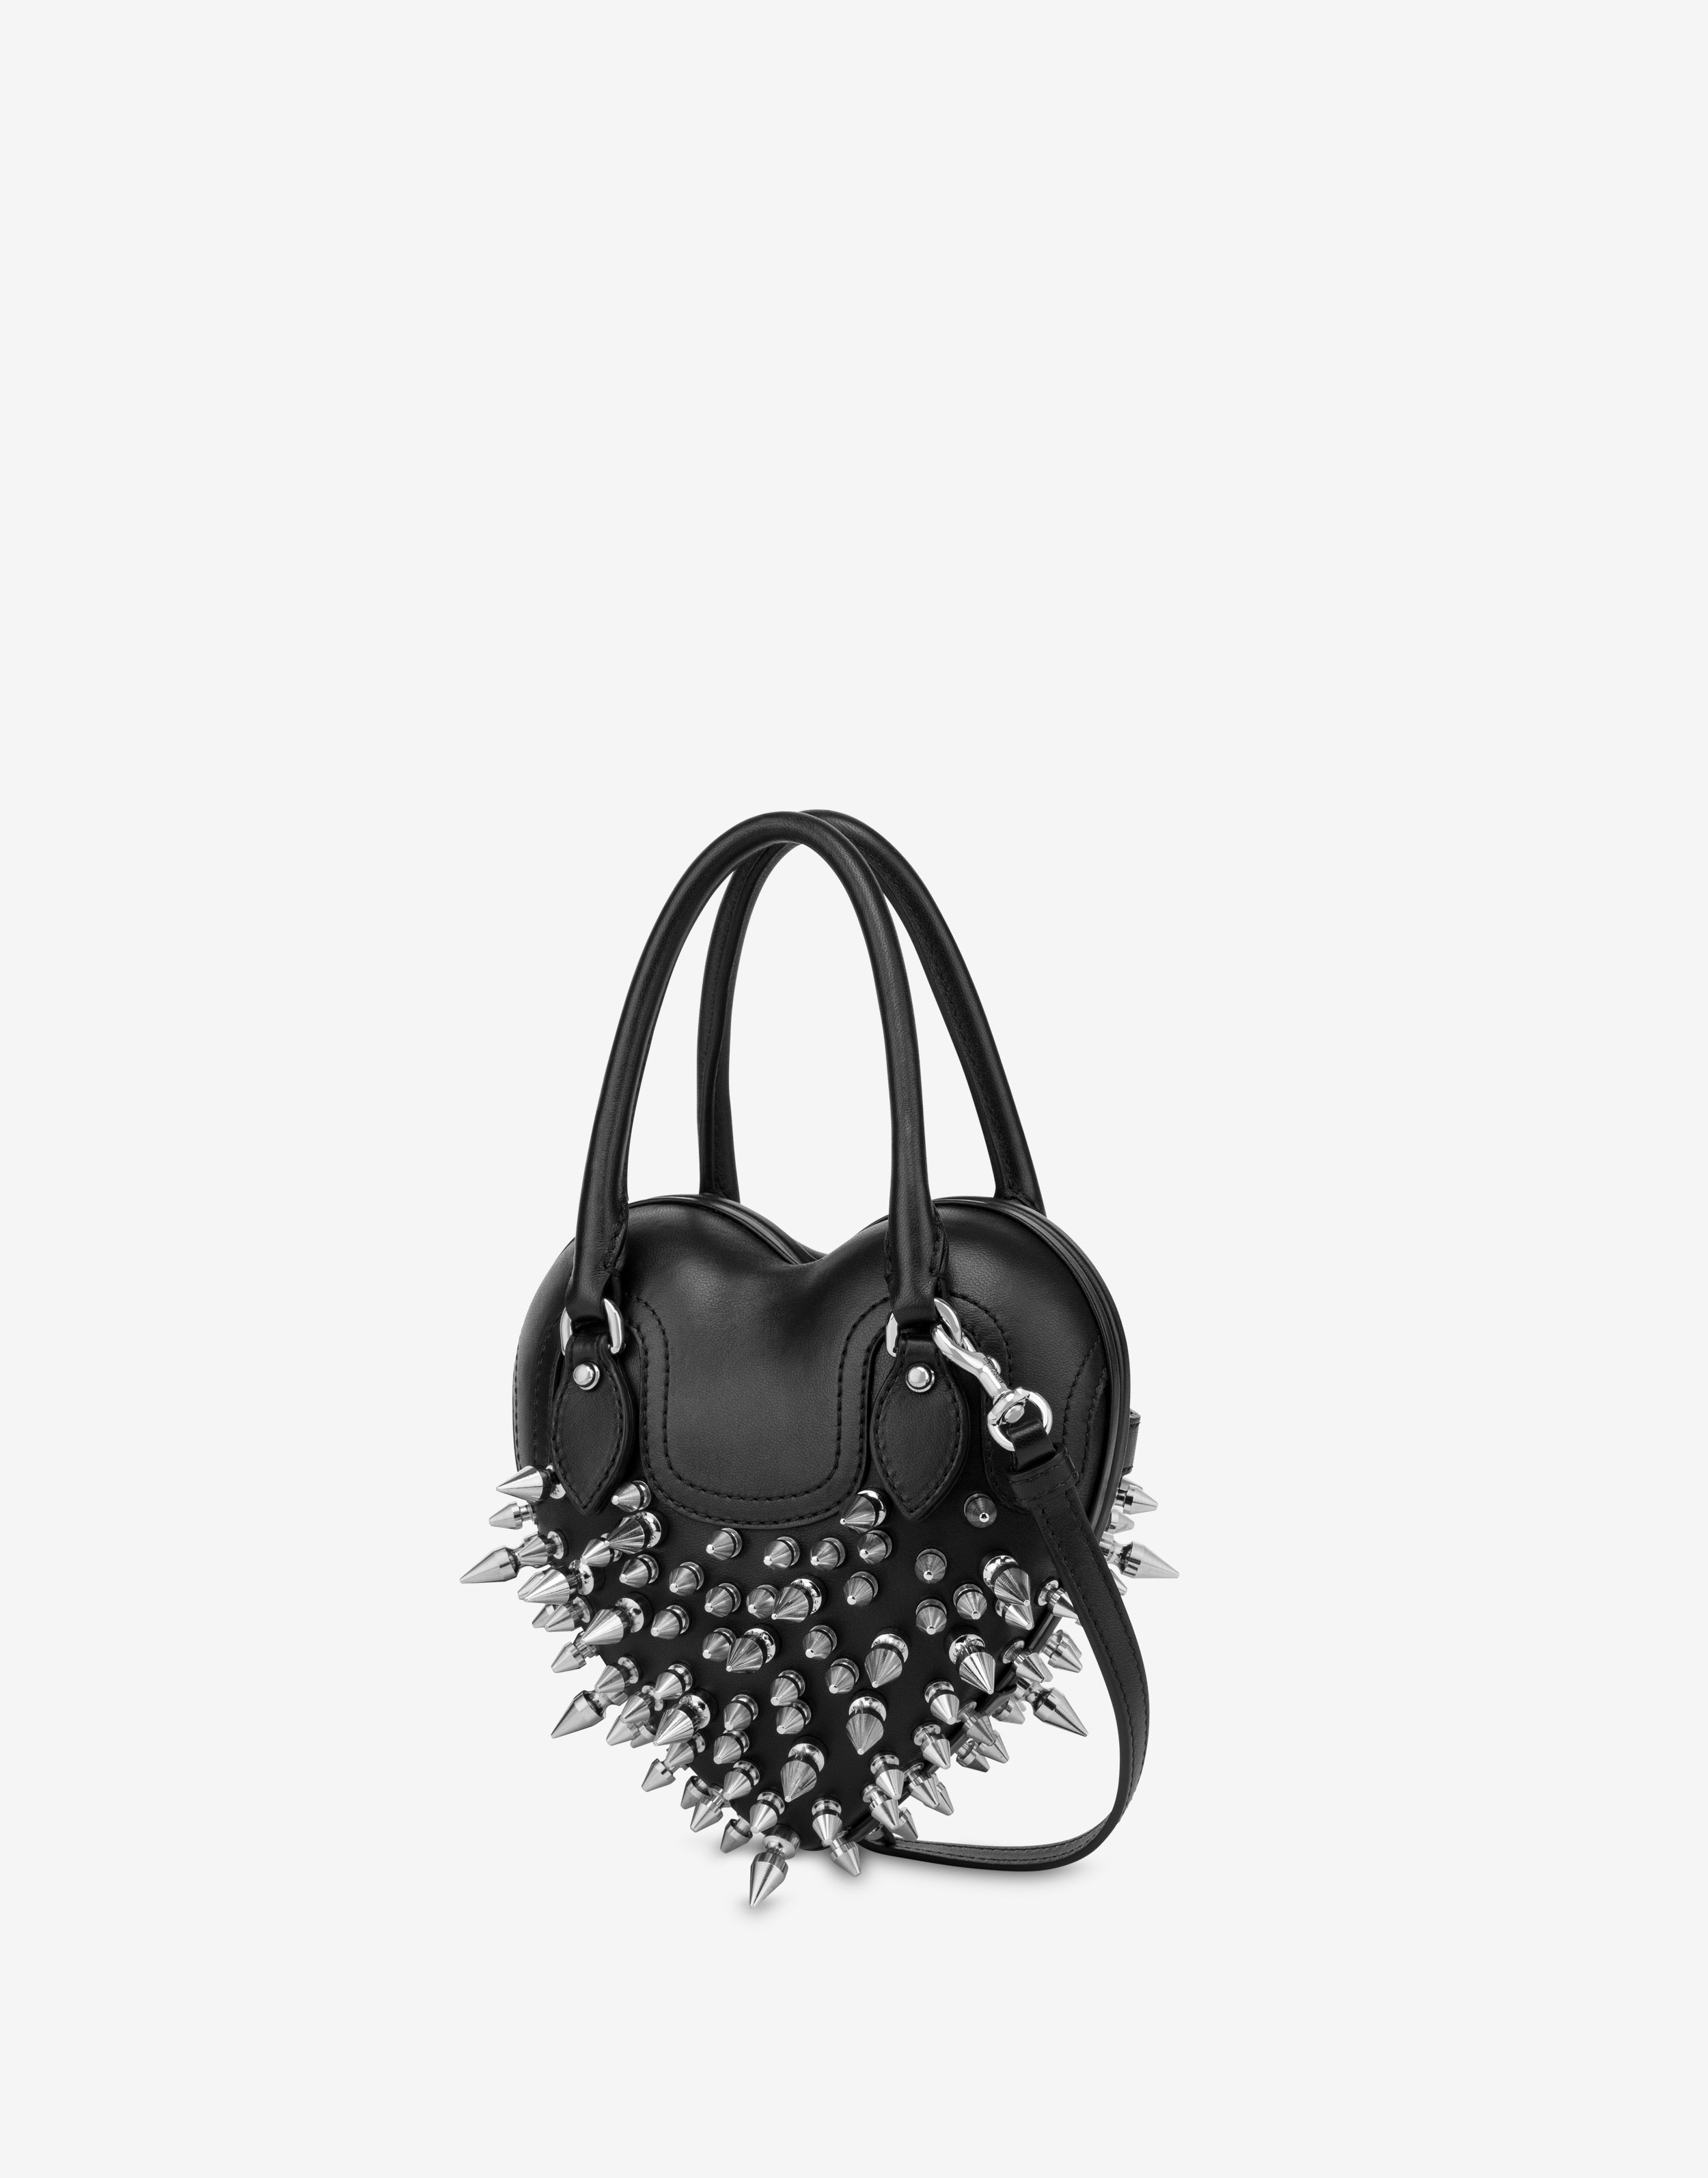 Louis vuitton purse - clothing & accessories - by owner - apparel sale -  craigslist